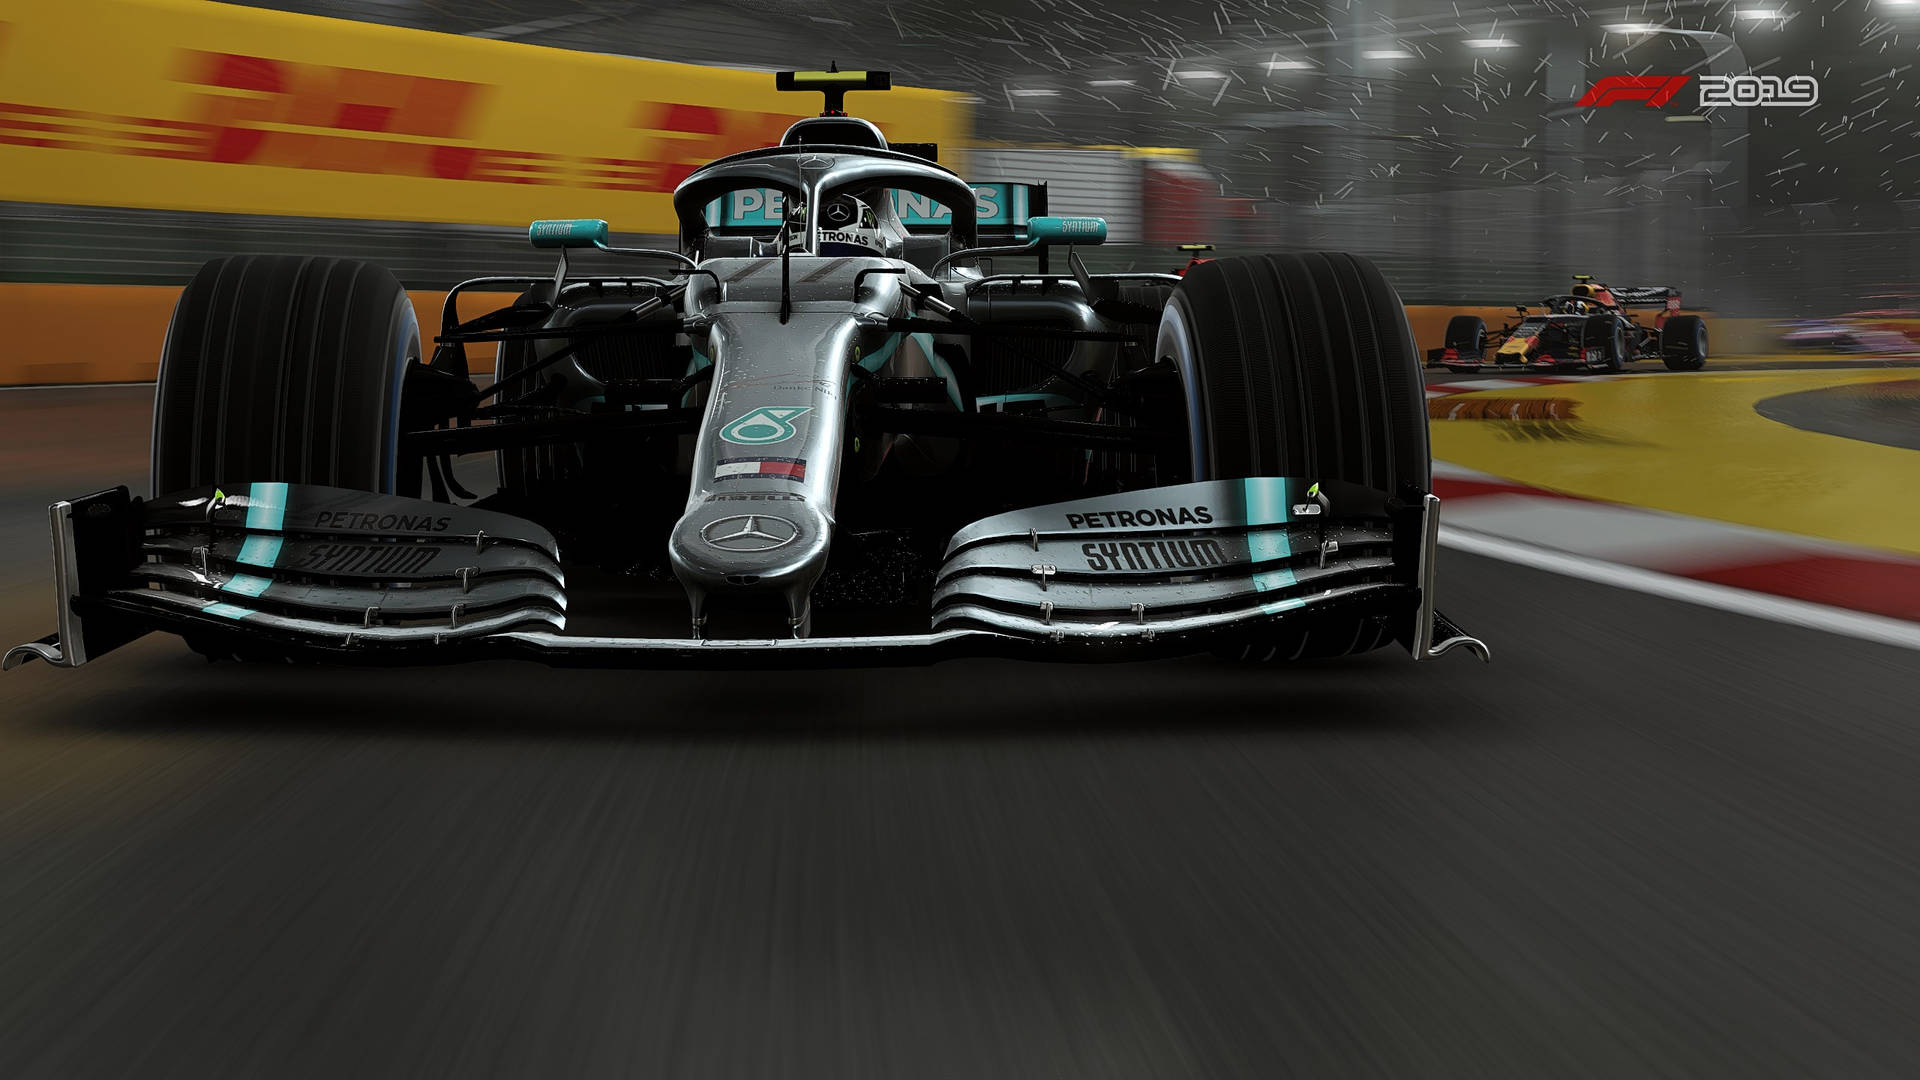 Valtteri Bottas' #77 Car In F1 2019 Background